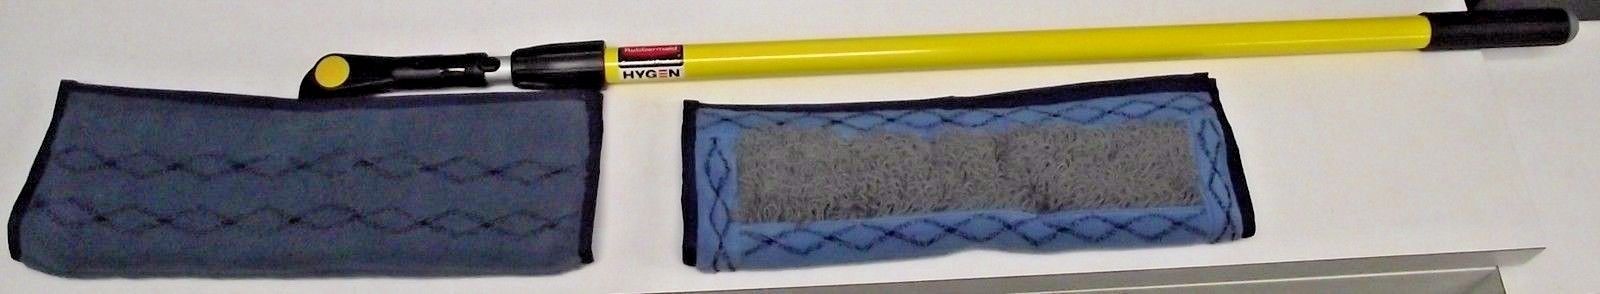 Rubbermaid 1807914 Clean Water System Mop Handle Microfiber Pad Starter Kit